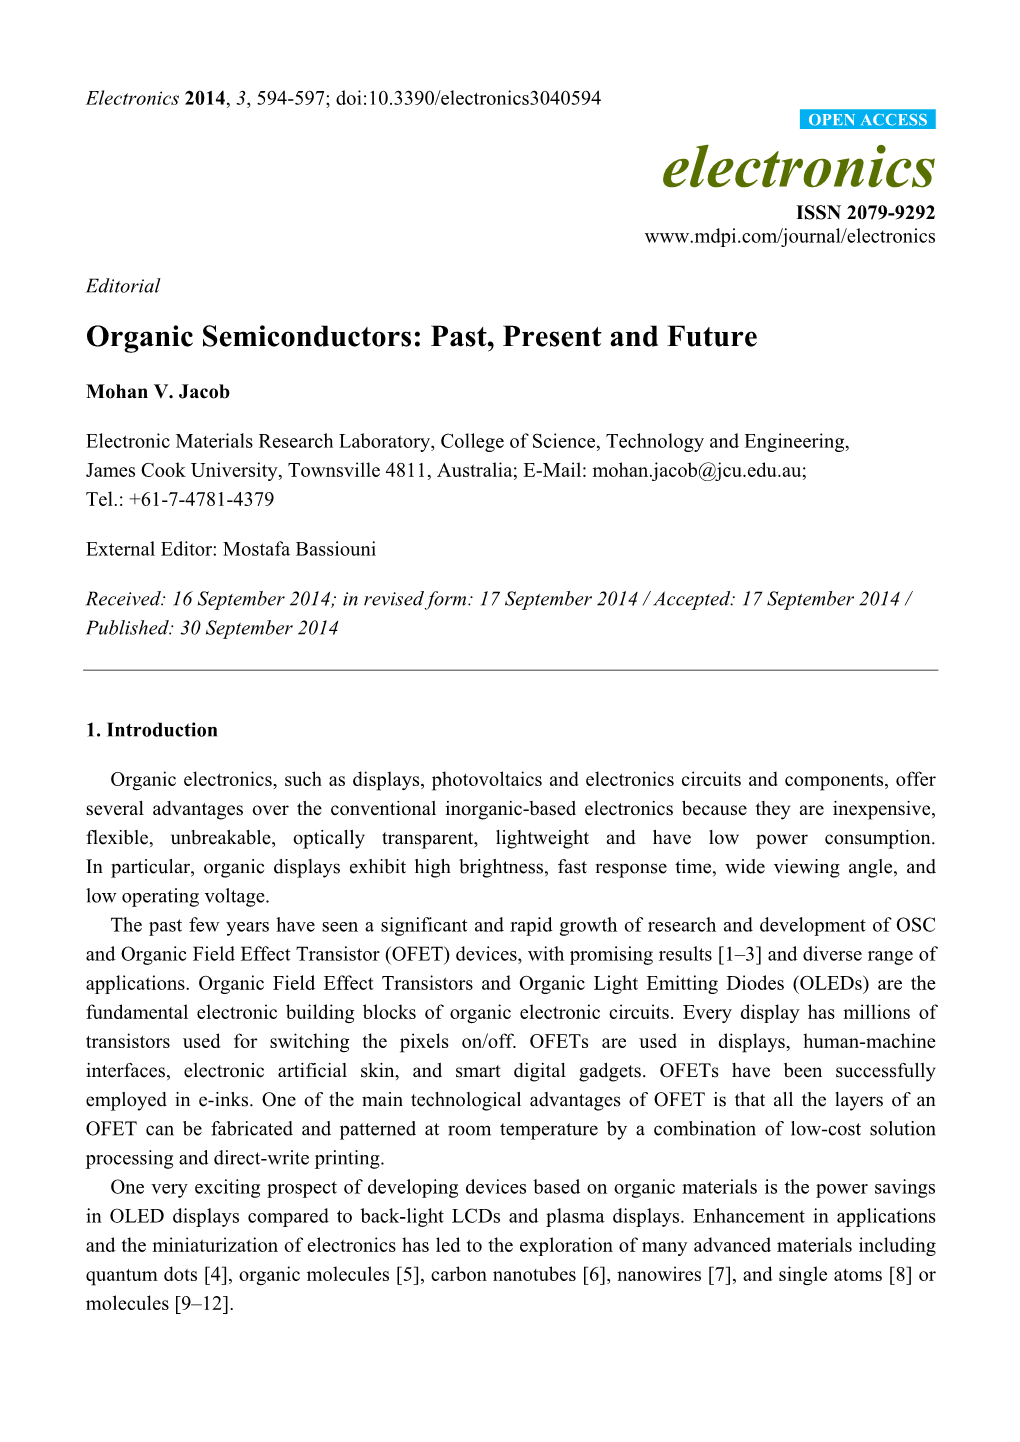 Organic Semiconductors: Past, Present and Future